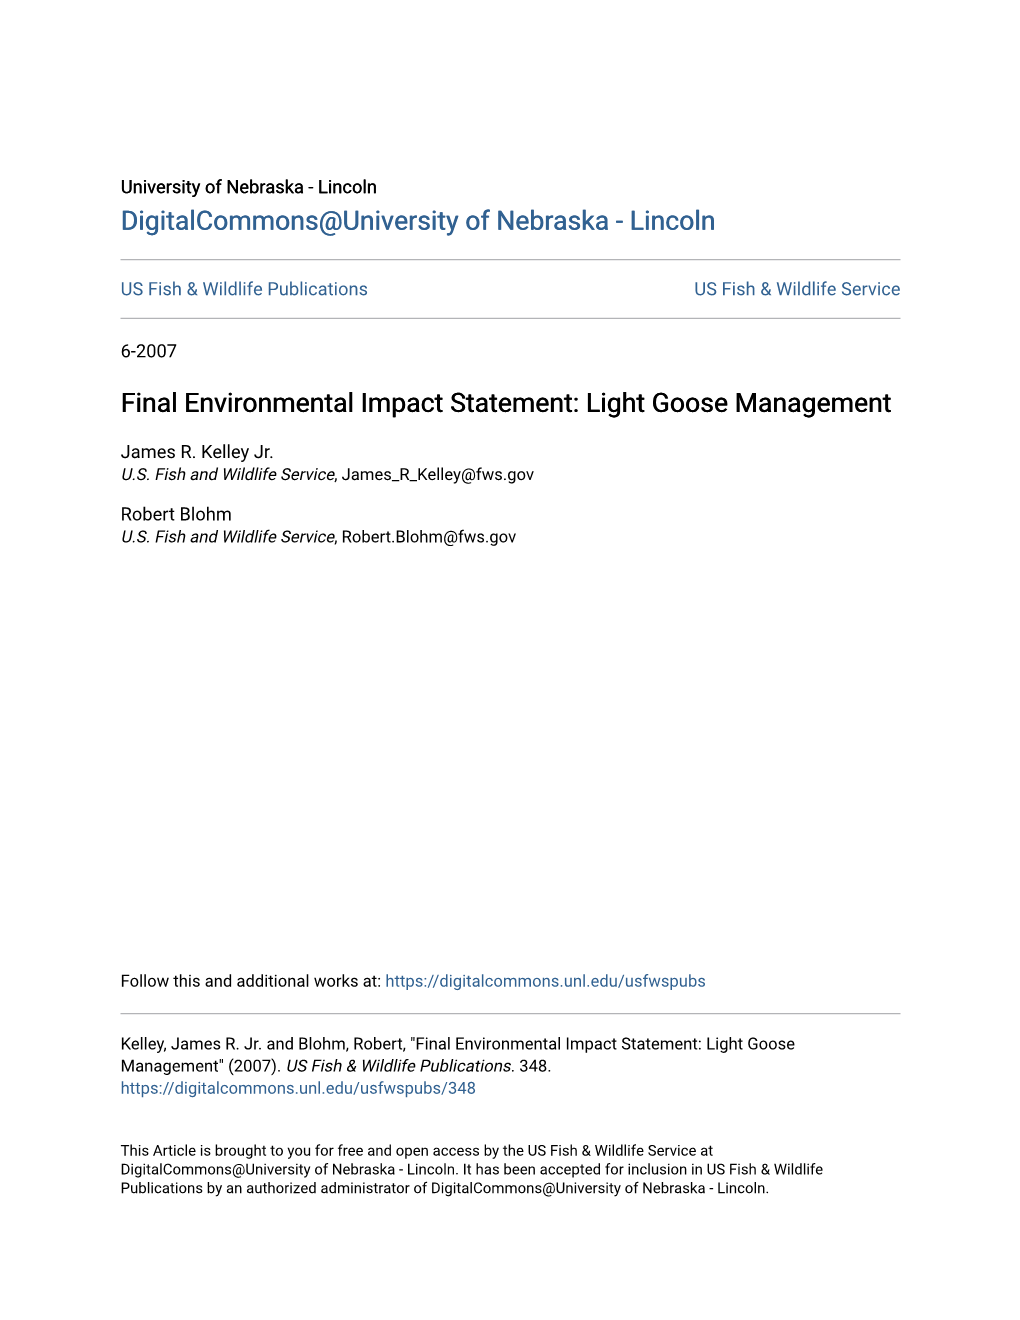 Final Environmental Impact Statement: Light Goose Management